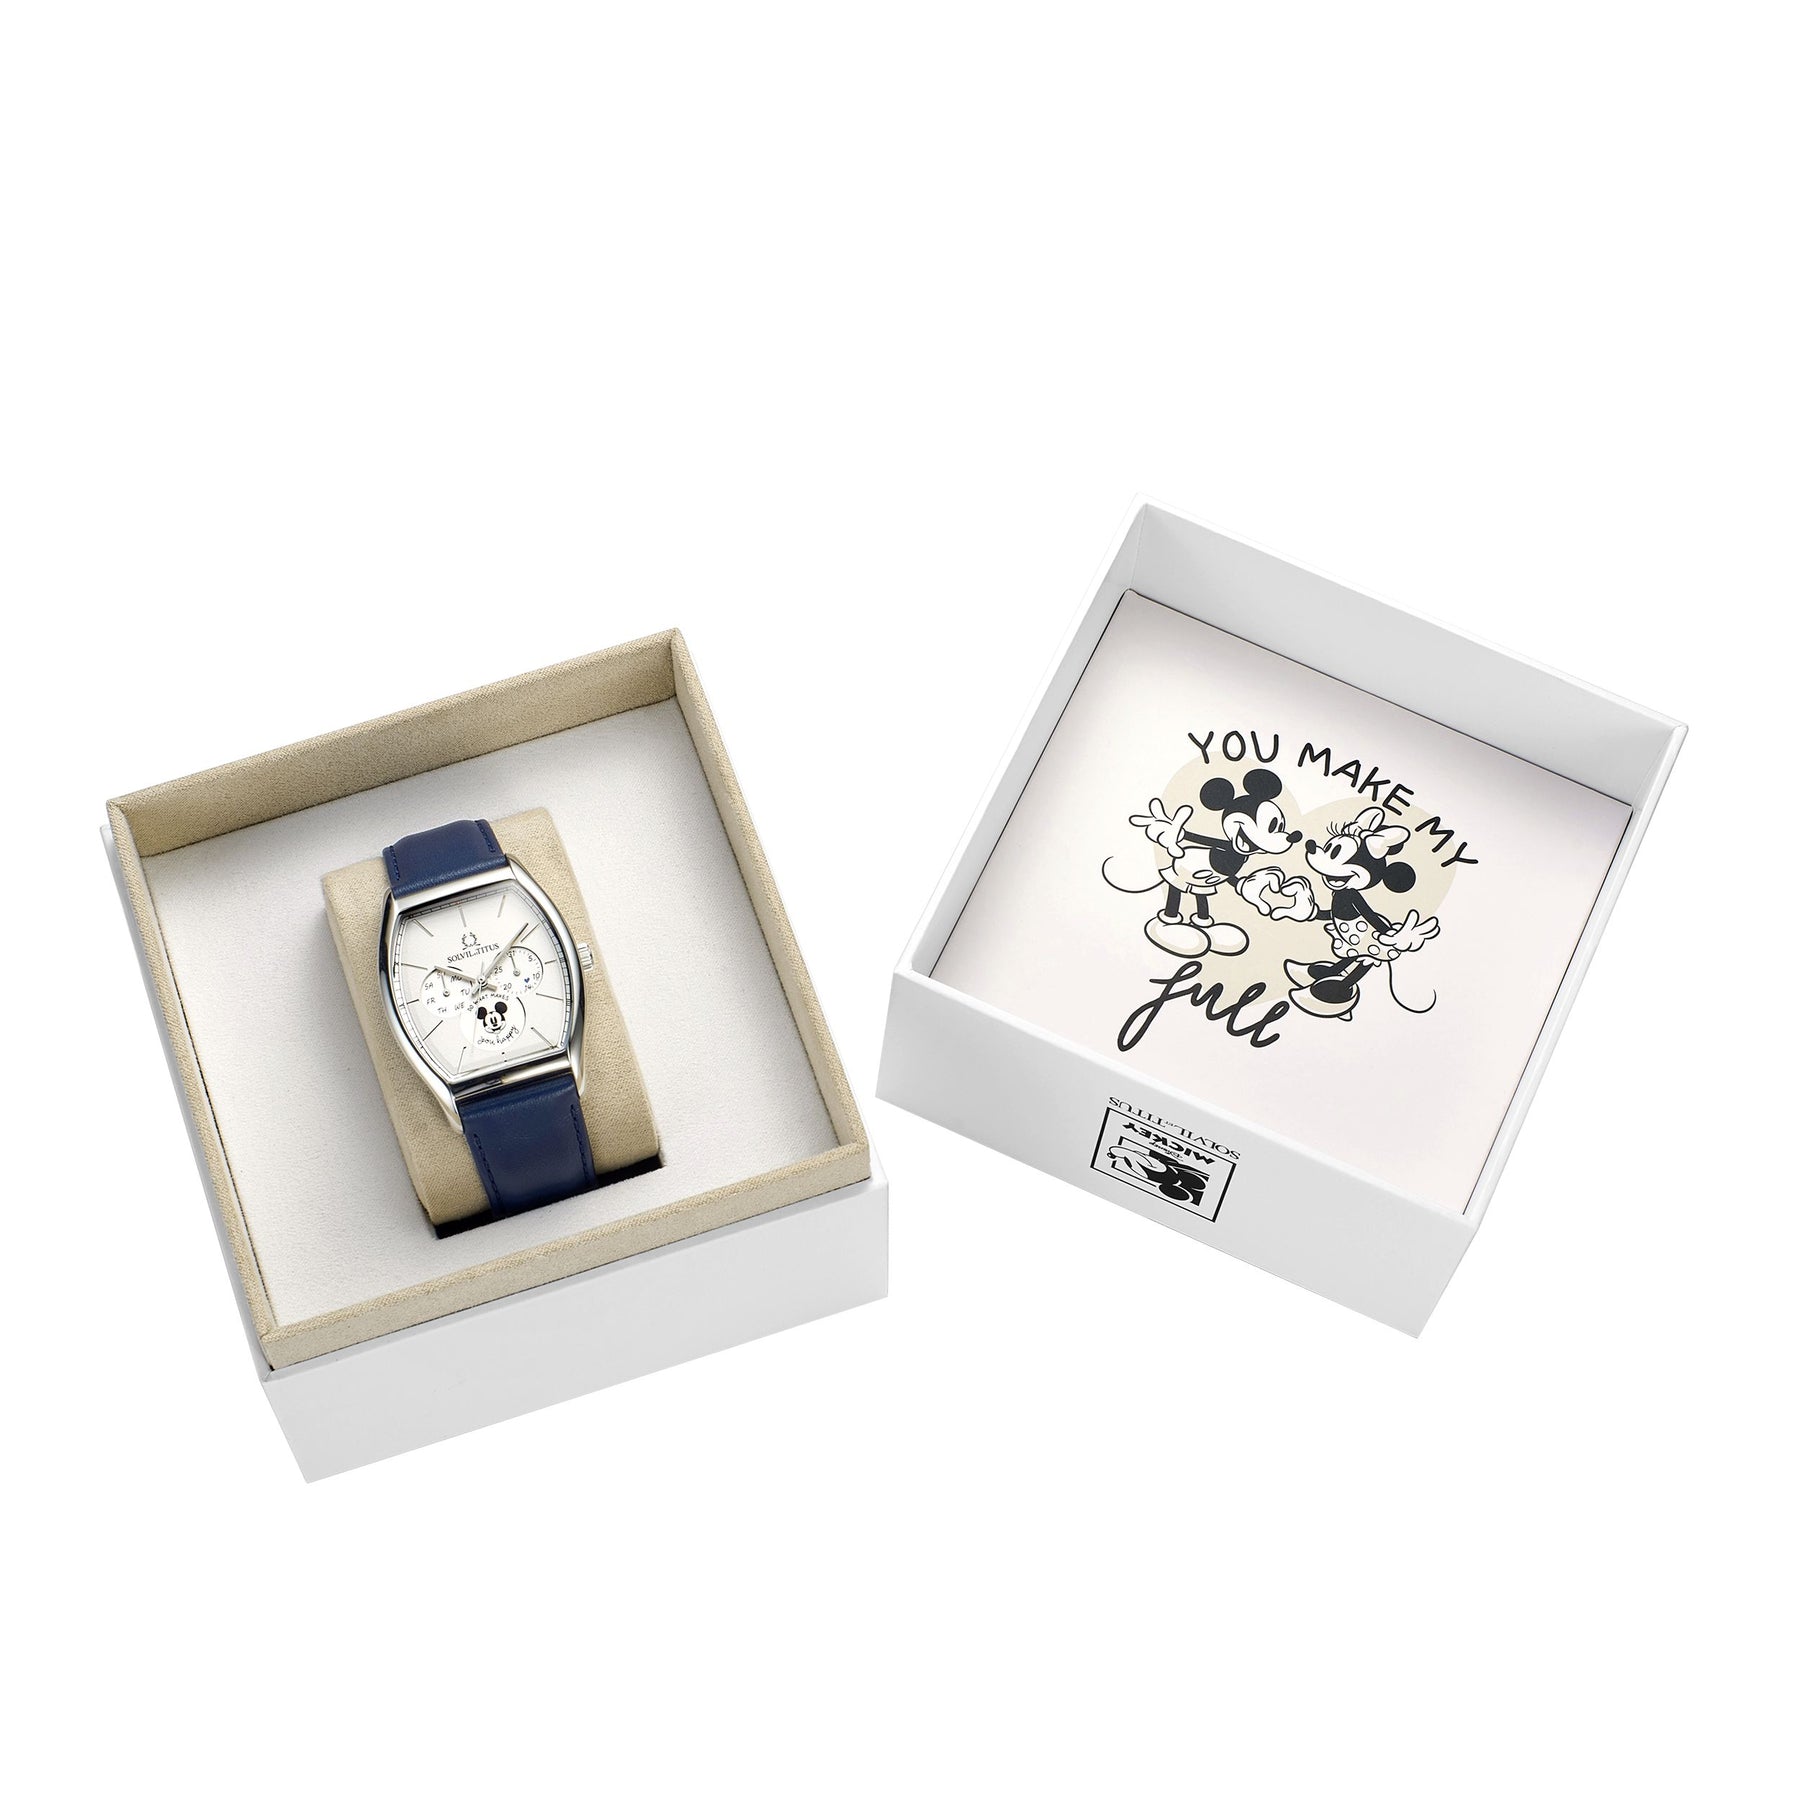 [MEN] Solvil et Titus x "Mickey Mouse" Valentine's Limited  Edition Multi-Function Quartz Leather Watch [W06-03357-001]